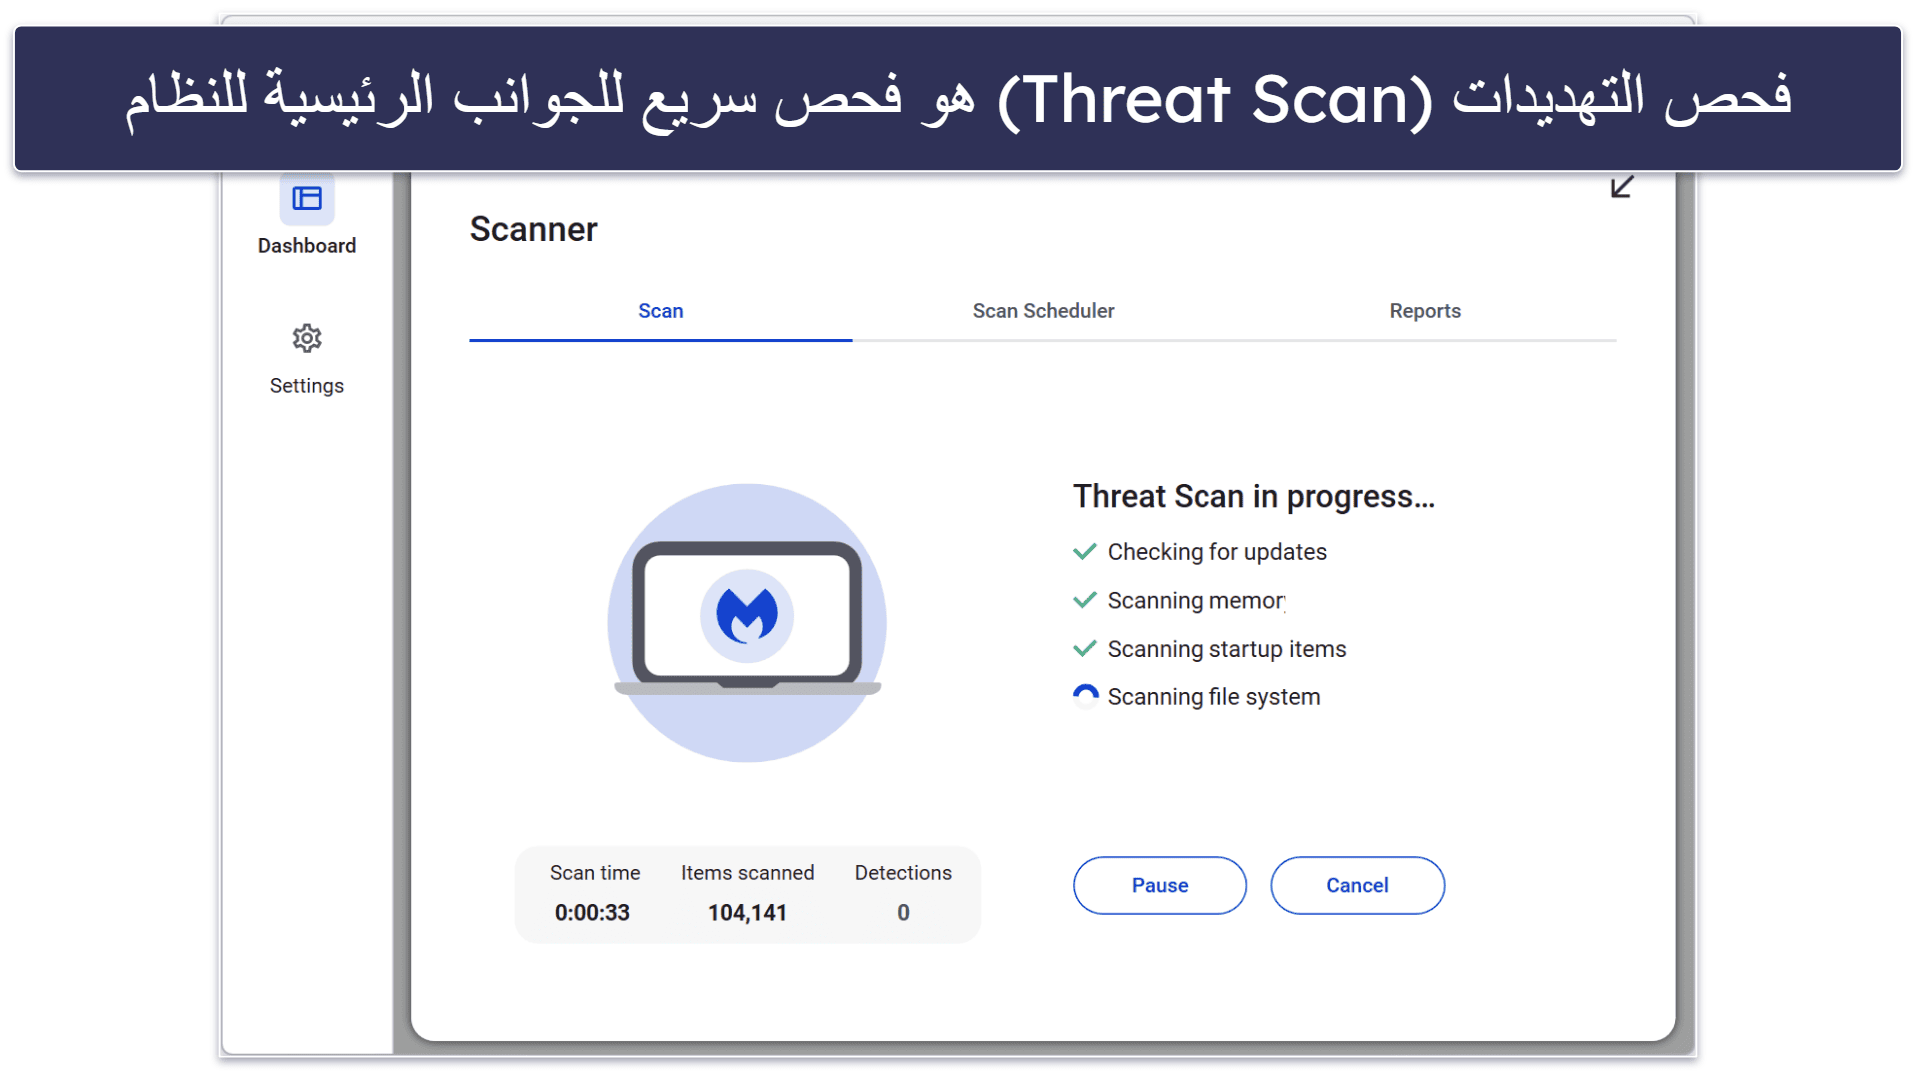 8. Malwarebytes Free — أداة فحص فيروسات بسيطة